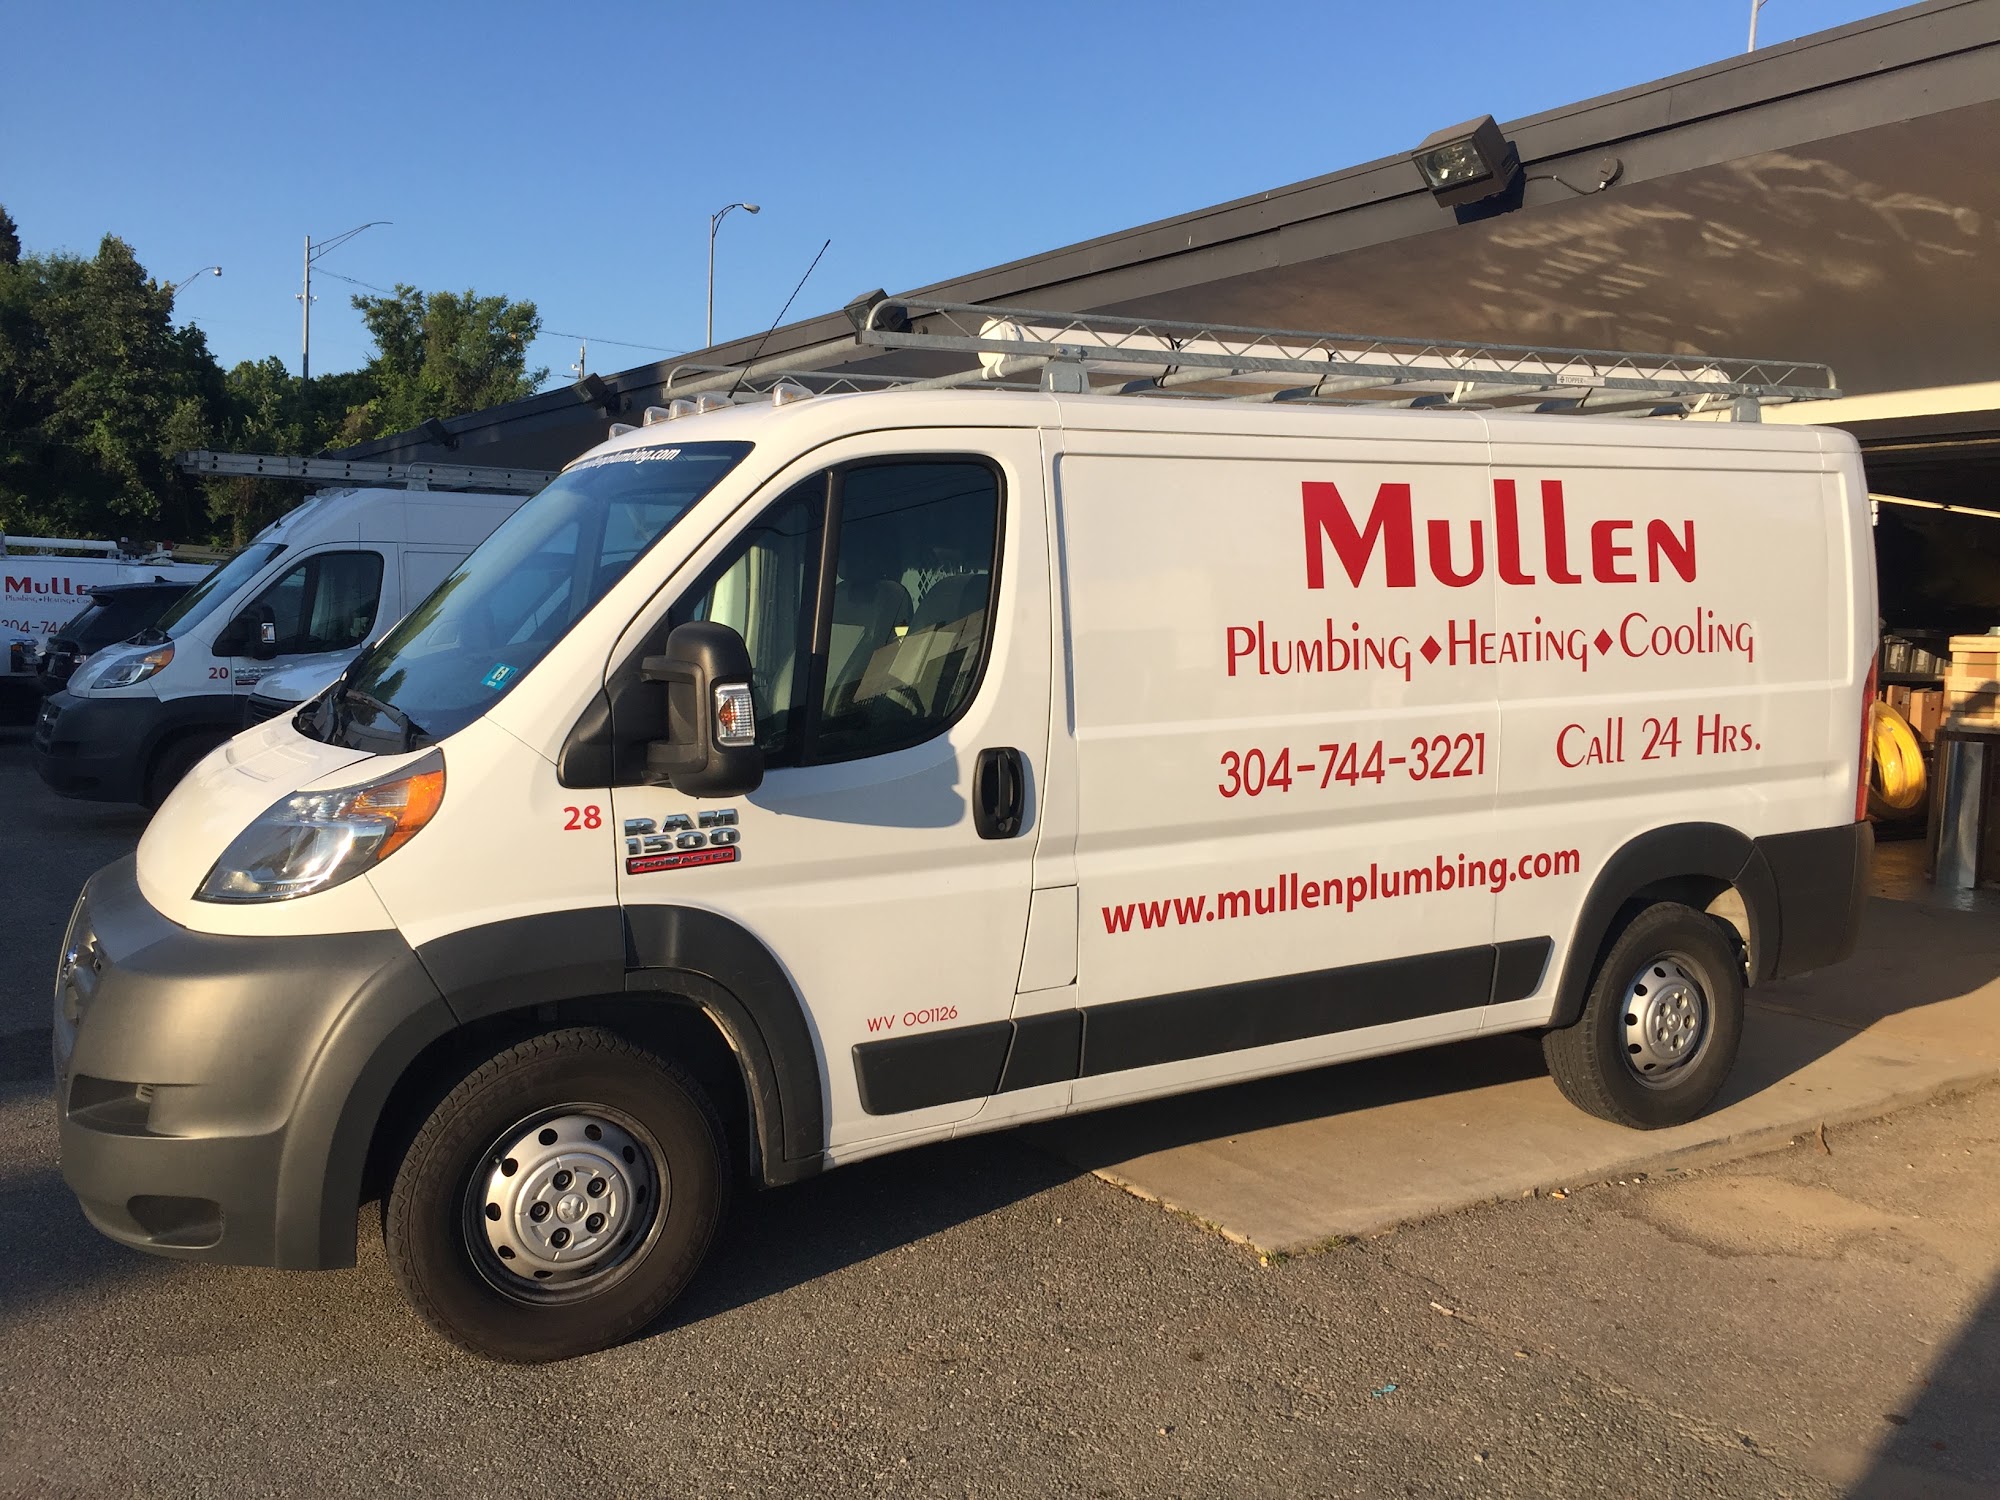 Mullen Plumbing, Heating & Cooling 301 B St, South Charleston West Virginia 25303